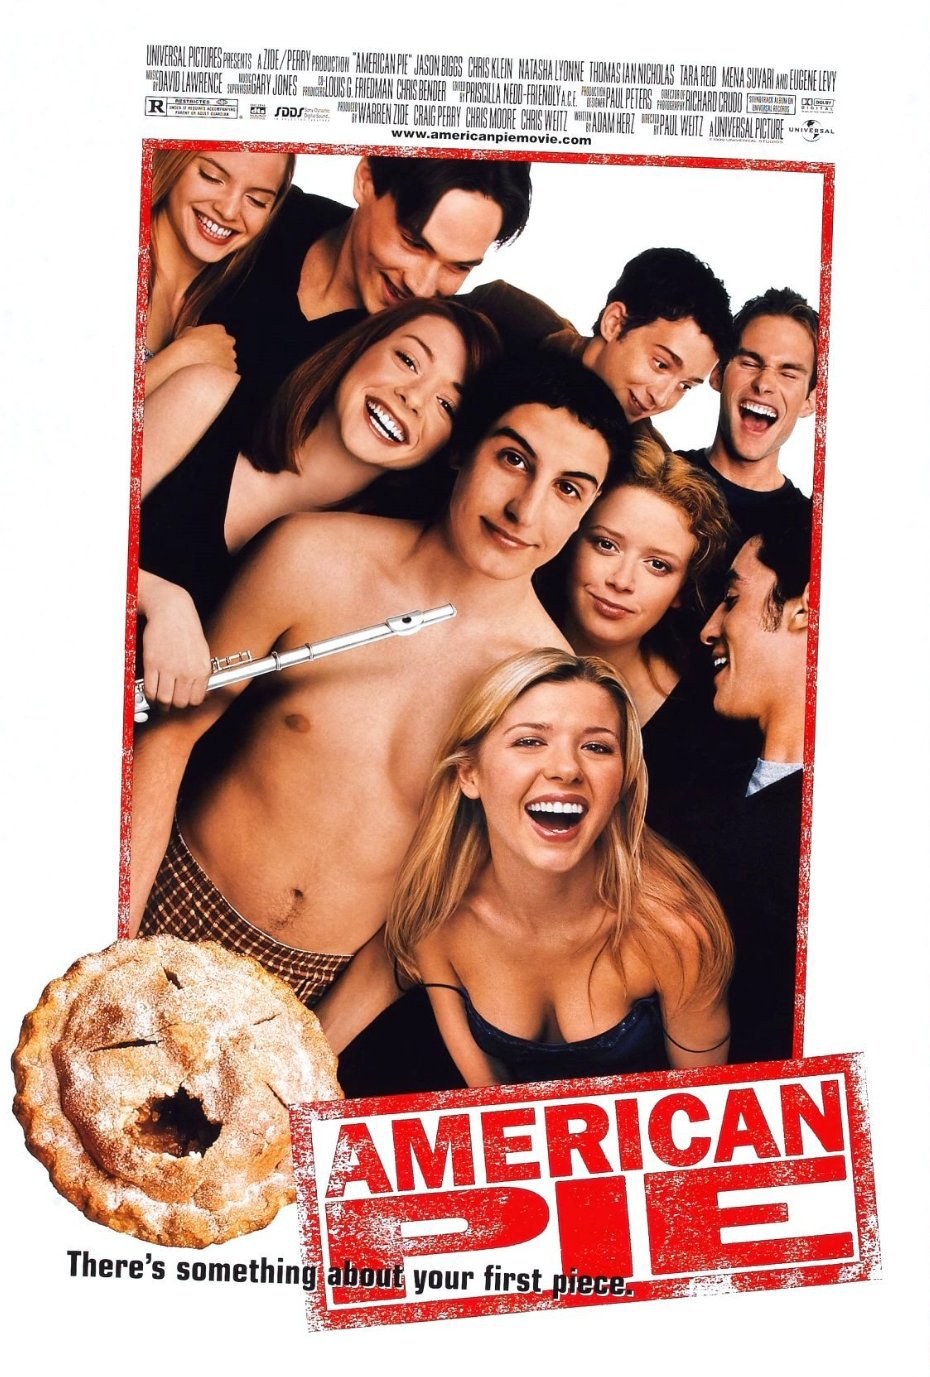 Movies Like The Hangover - American Pie